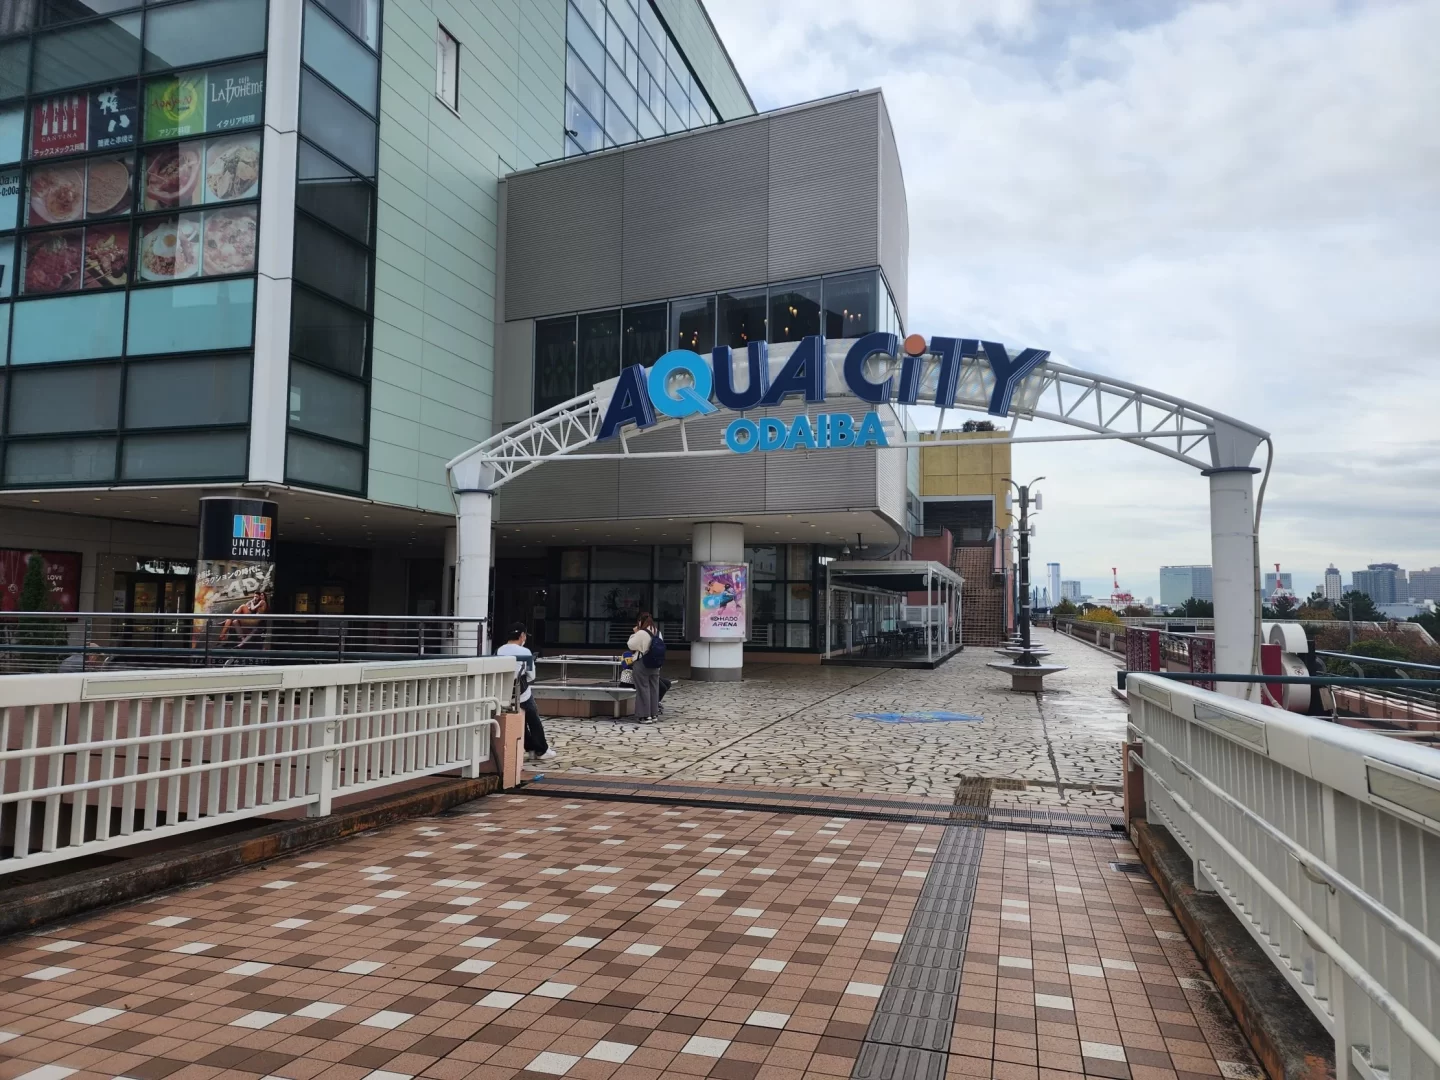 Aqua city odaiba, odaiba, shopping mall, aqua city,